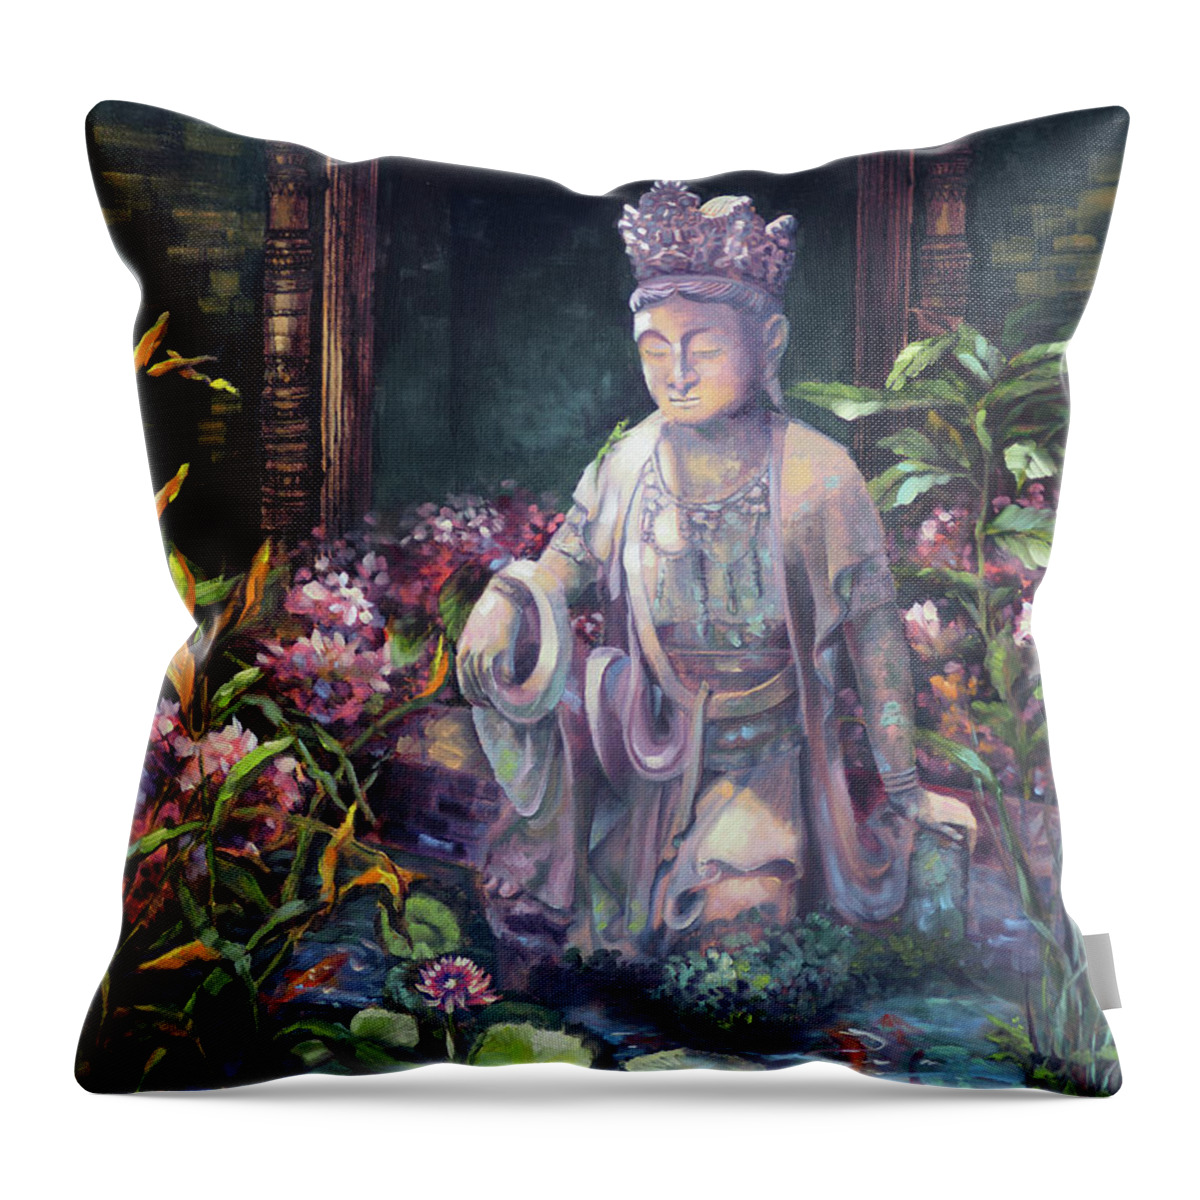 Budda Throw Pillow featuring the painting Budda Statue and Pond by David Bader